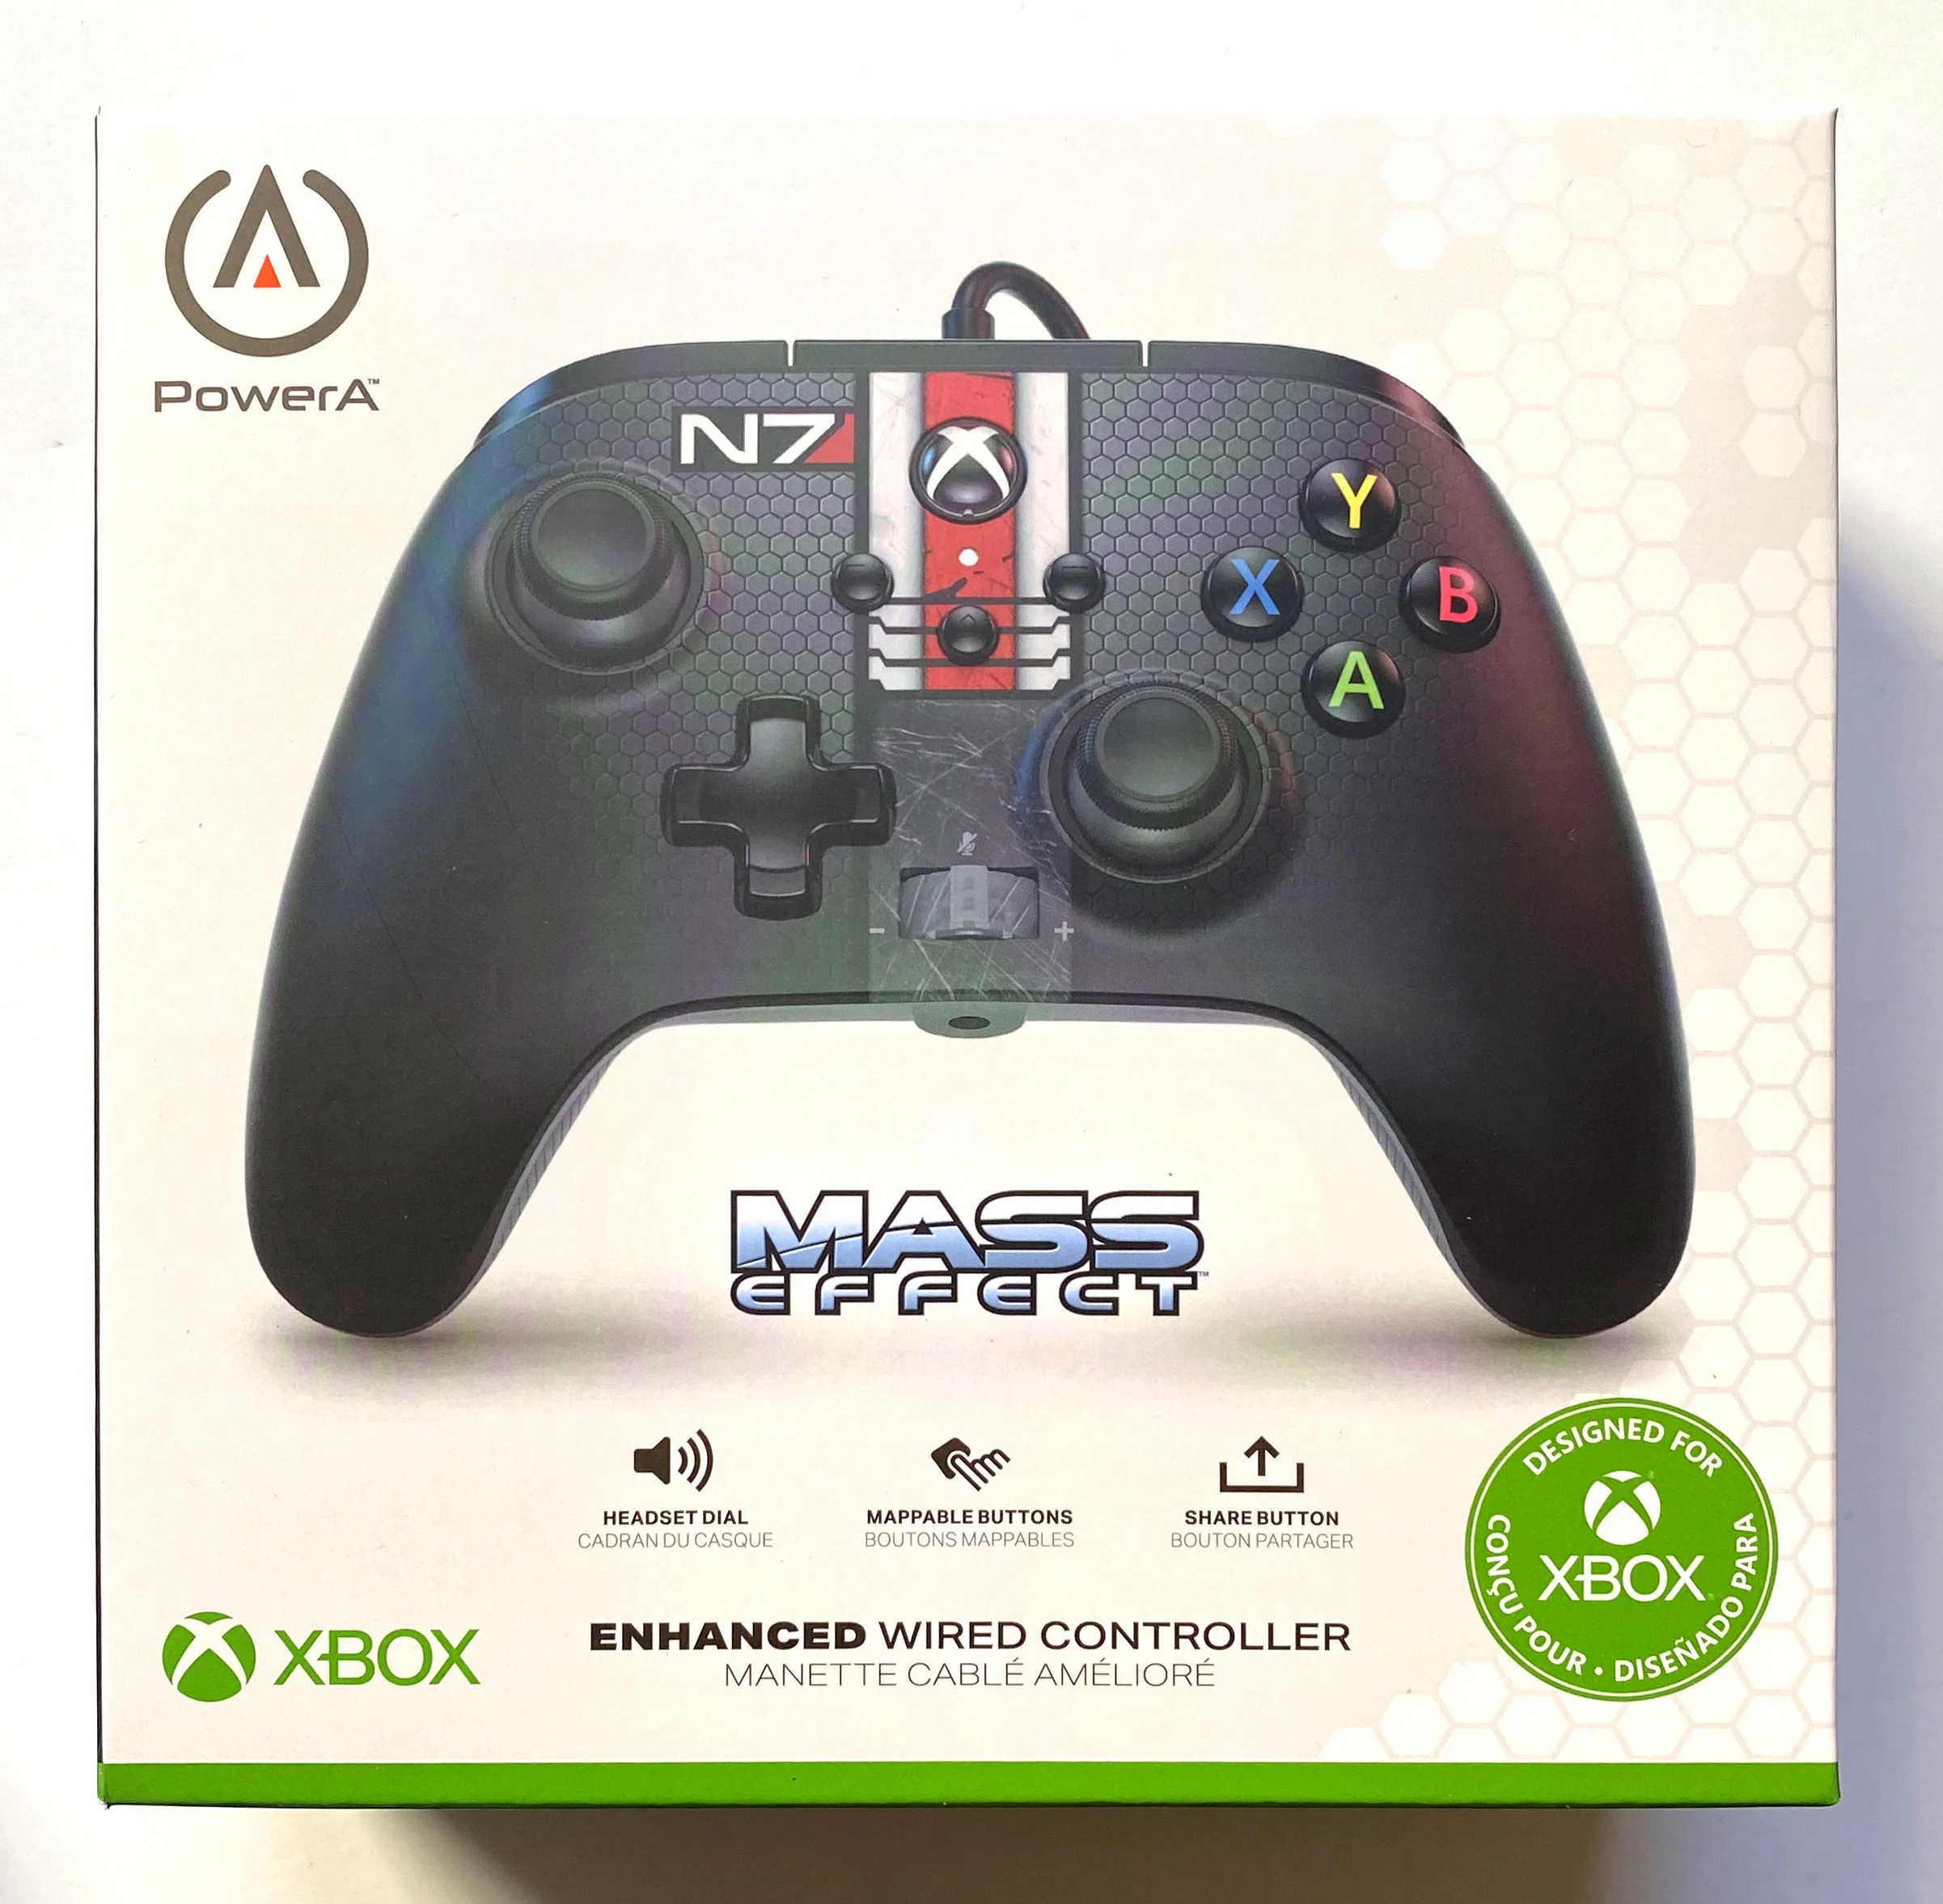 Kalkun tidligste Imidlertid CV | Power A Xbox Series X Mass Effect Wired Controller